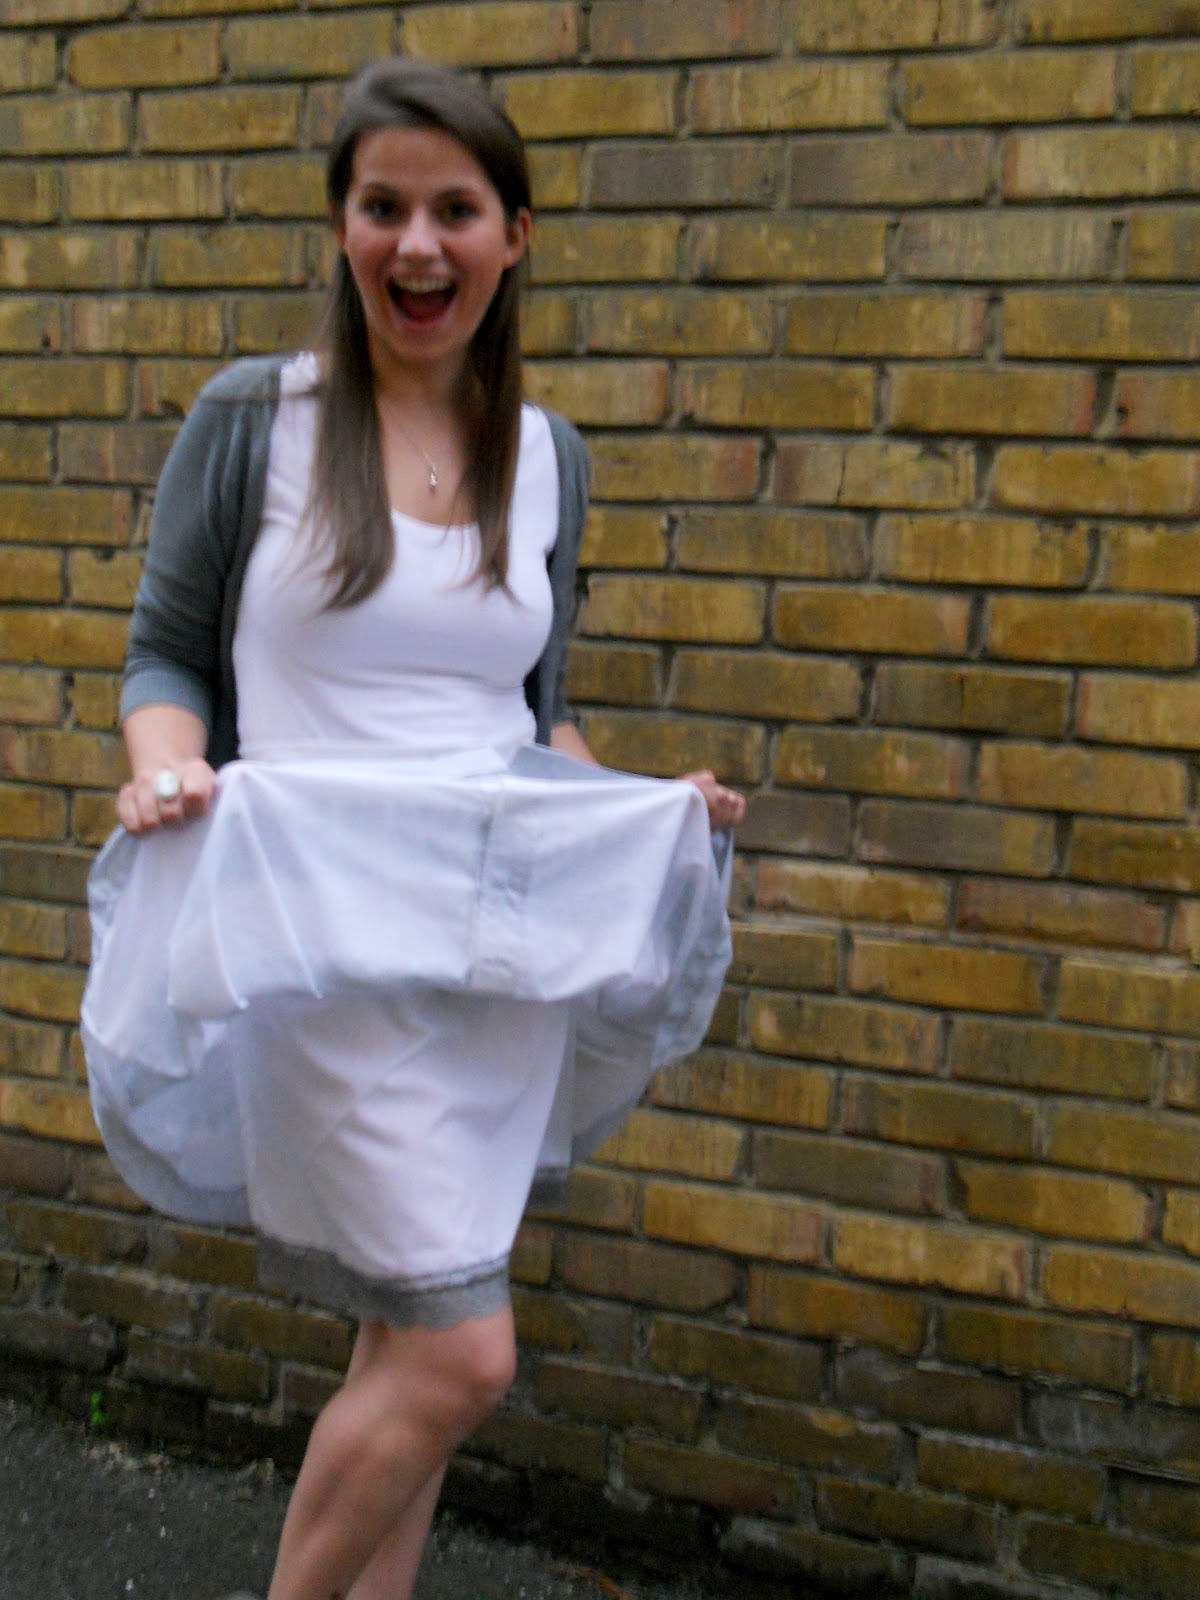 Public Upskirt With Woman Exposing Classic Panties – Telegraph